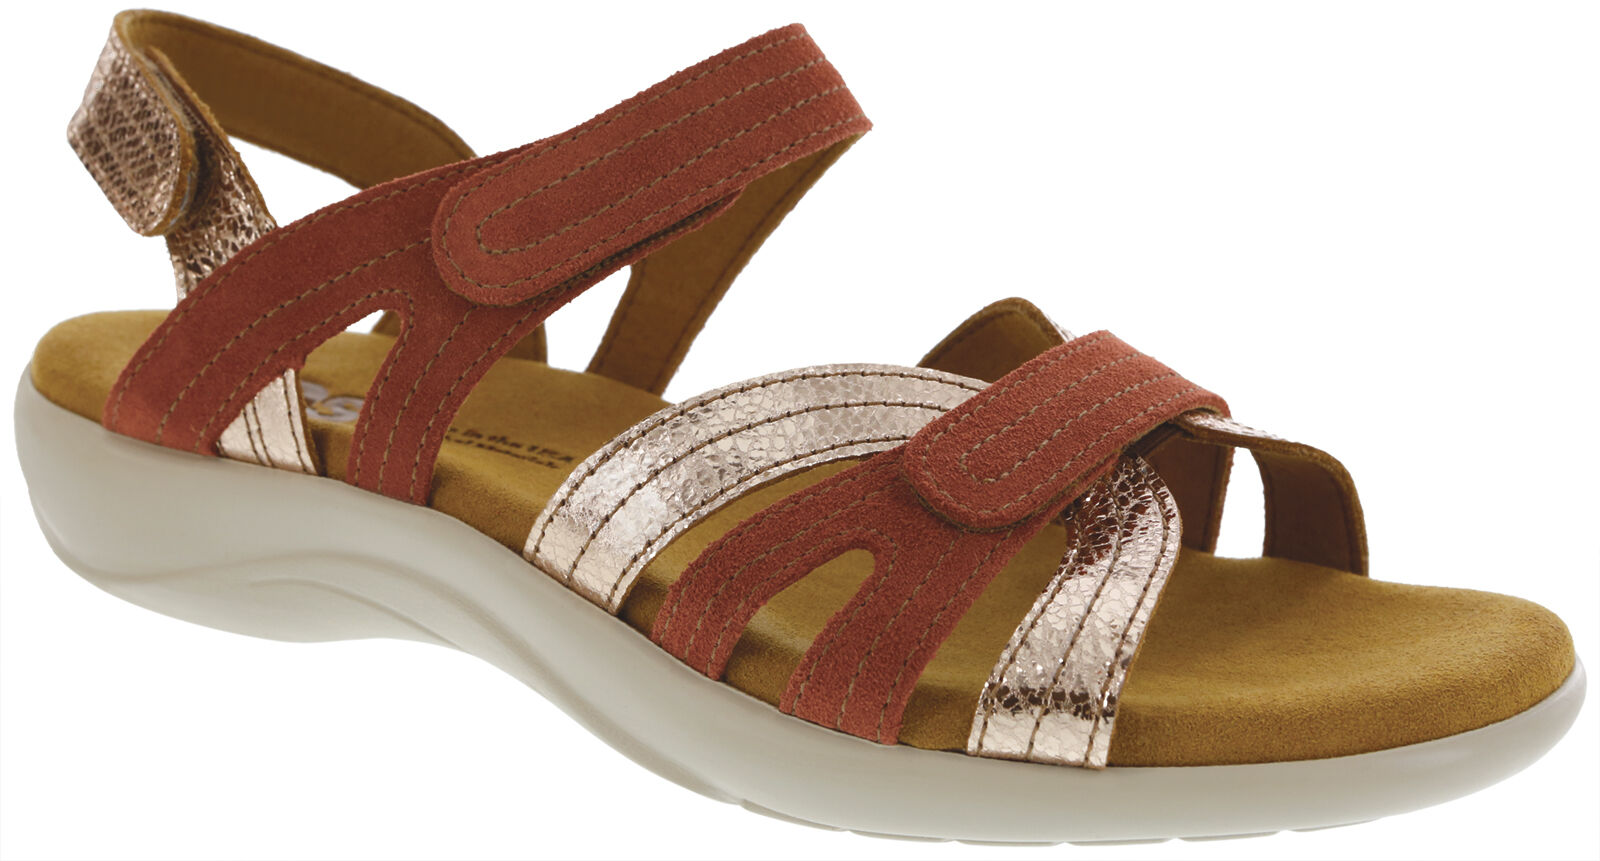 Buy Smart & Sleek Transparent Block Heels Sandals for Women & Girls  (Color-Gold, Size-3) at Amazon.in